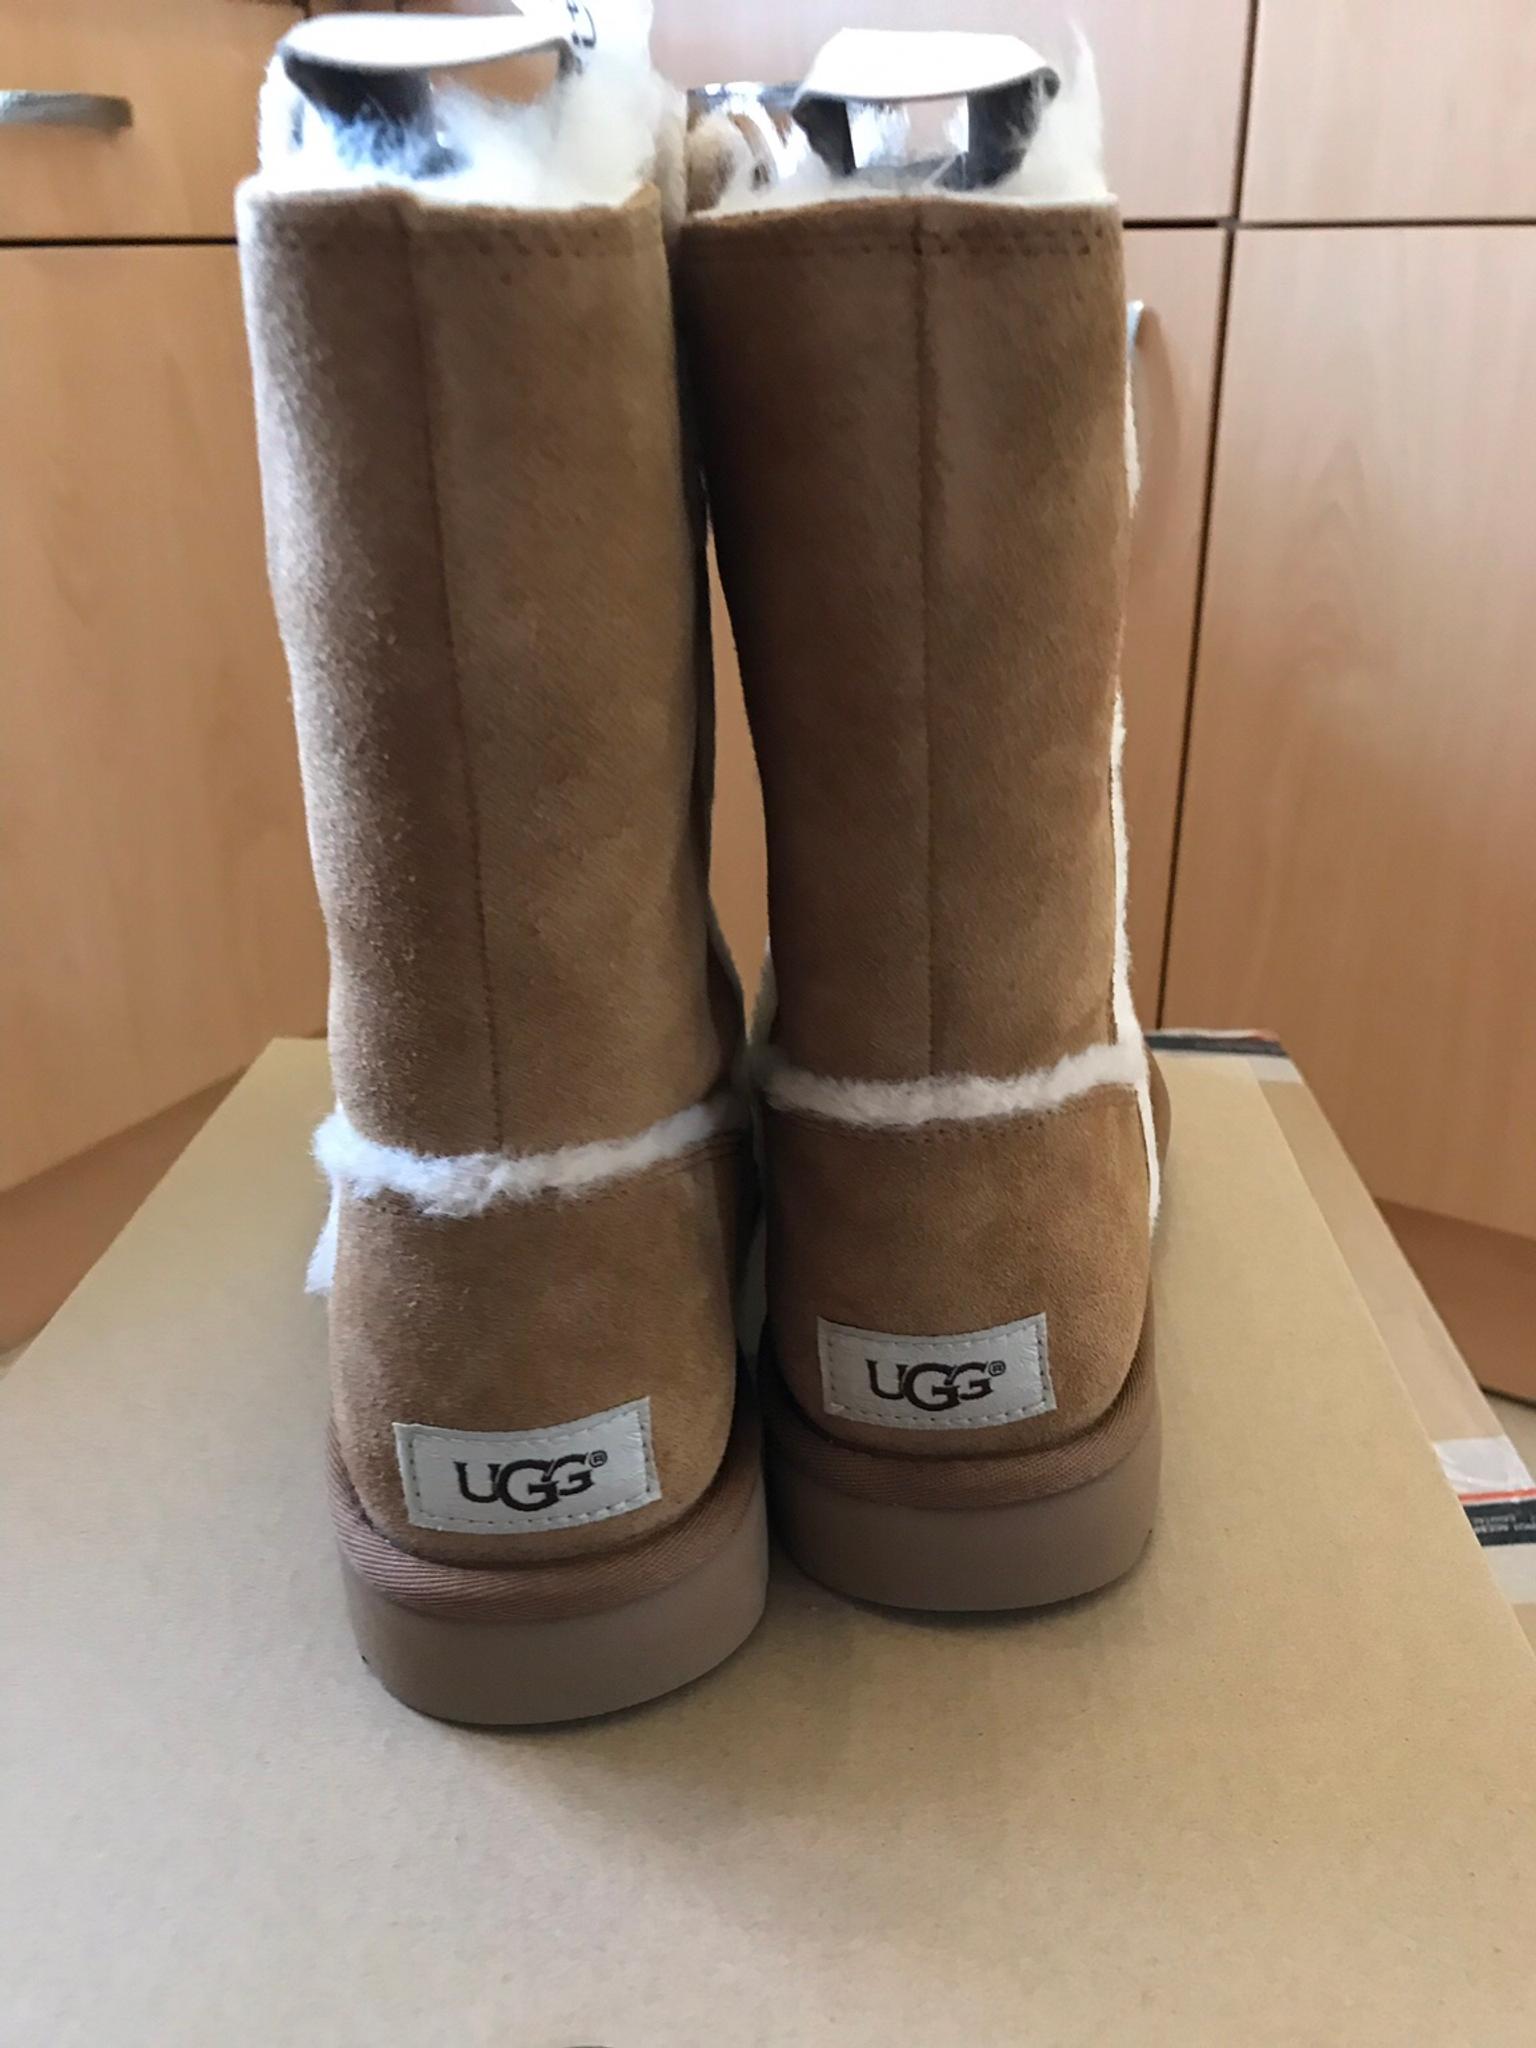 ugg boots uk size 5